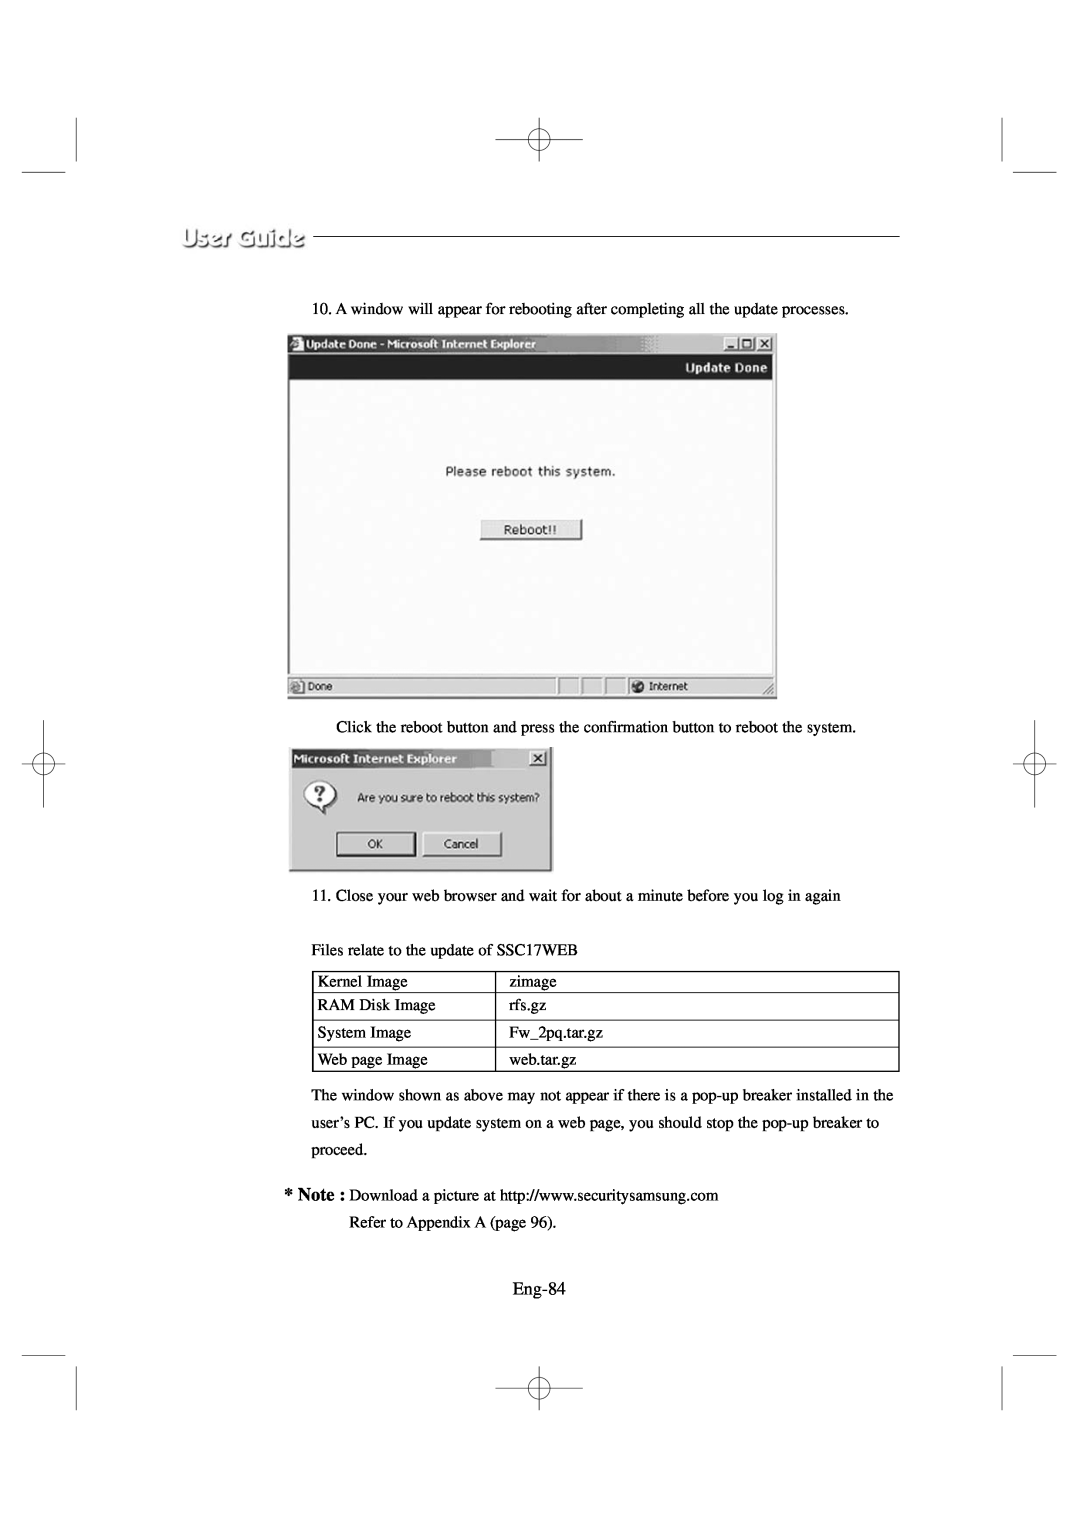 Samsung SSC17WEB manual Eng-84 